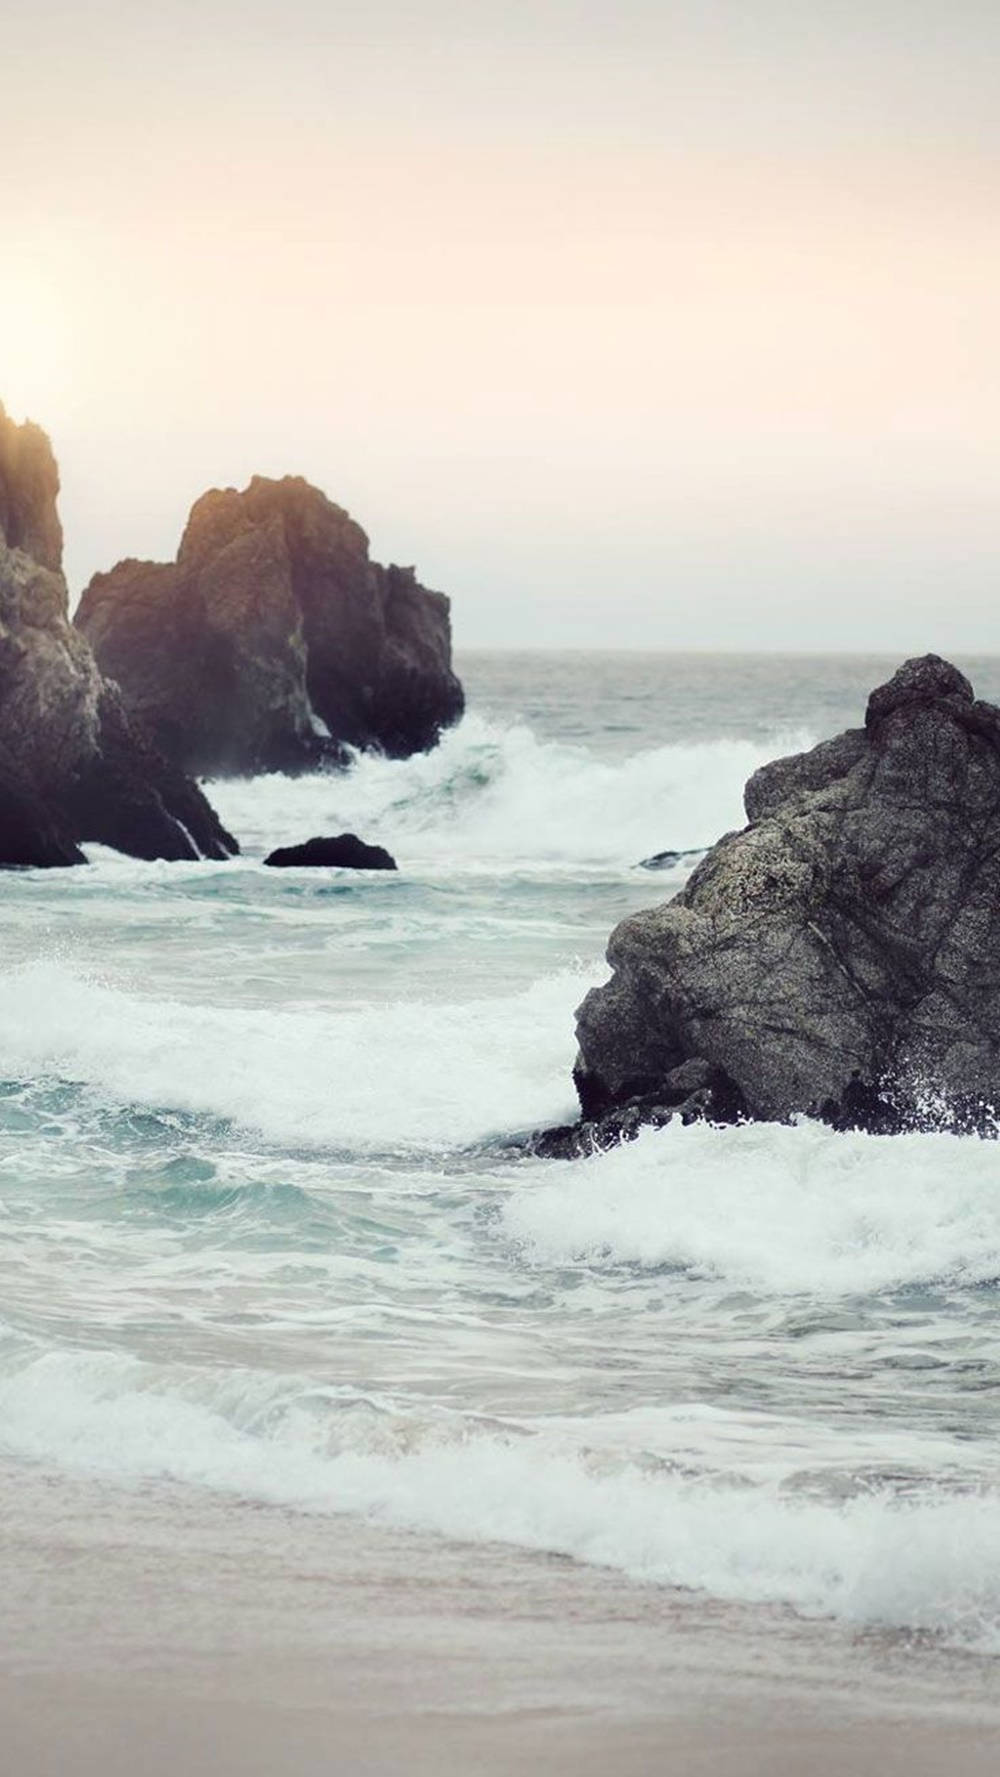 Enjoy stunning ocean views on your iPhone Wallpaper